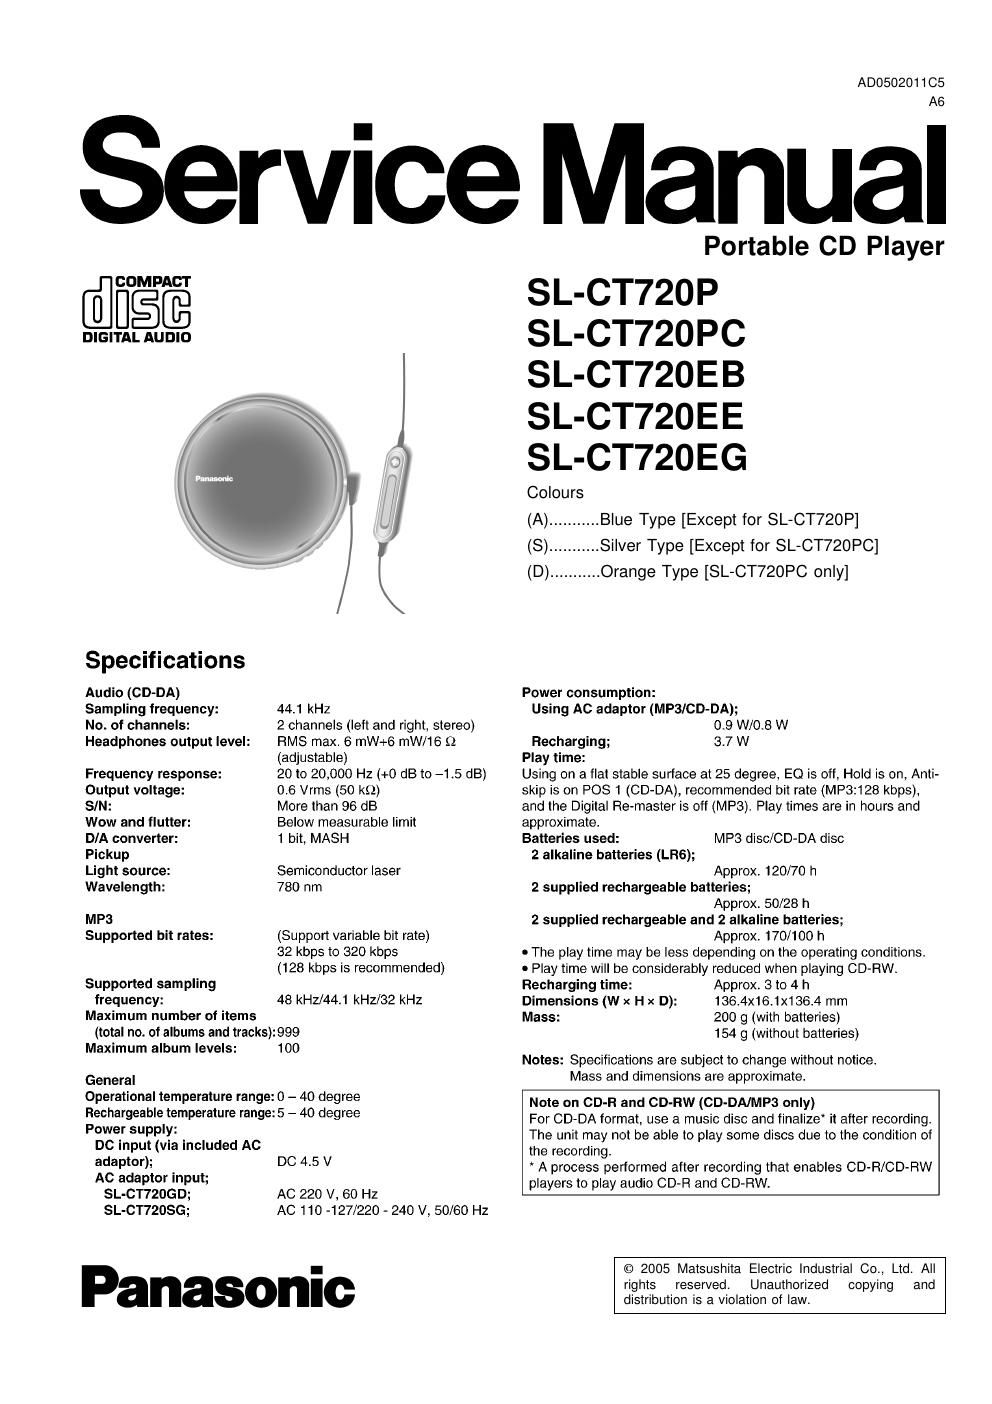 panasonic sl ct 720 eb service manual